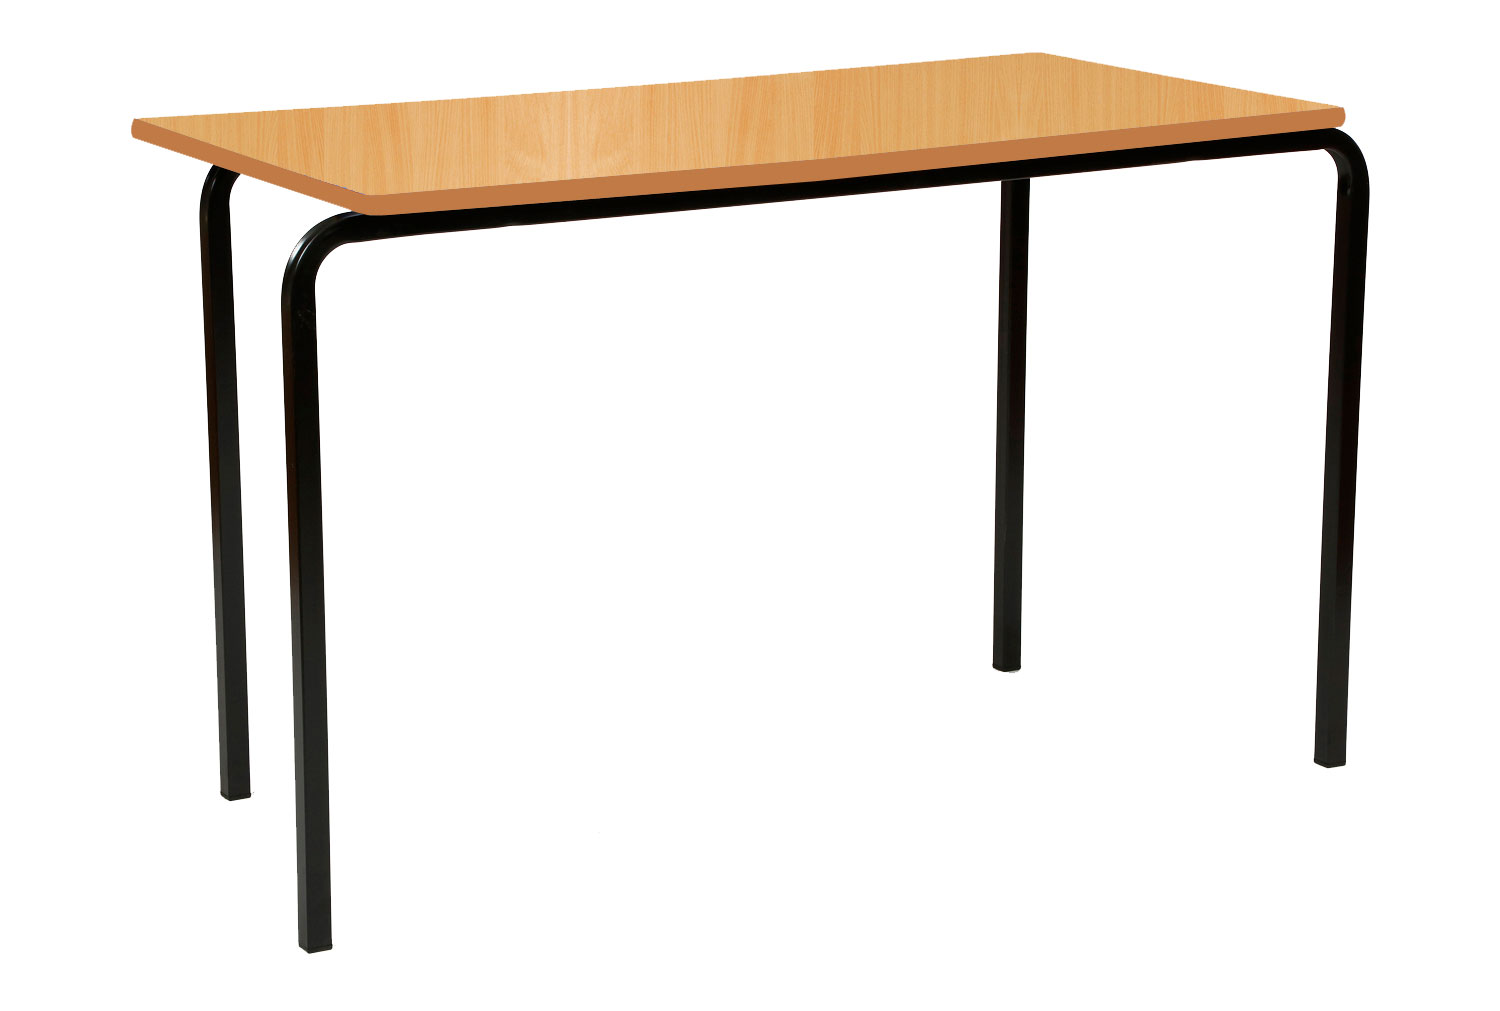 Qty 6 - Educate Crush Bent Rectangular Classroom Table 14+ Years (MDF Edge), 120wx60dx76h (cm), Black Frame, Blue Top